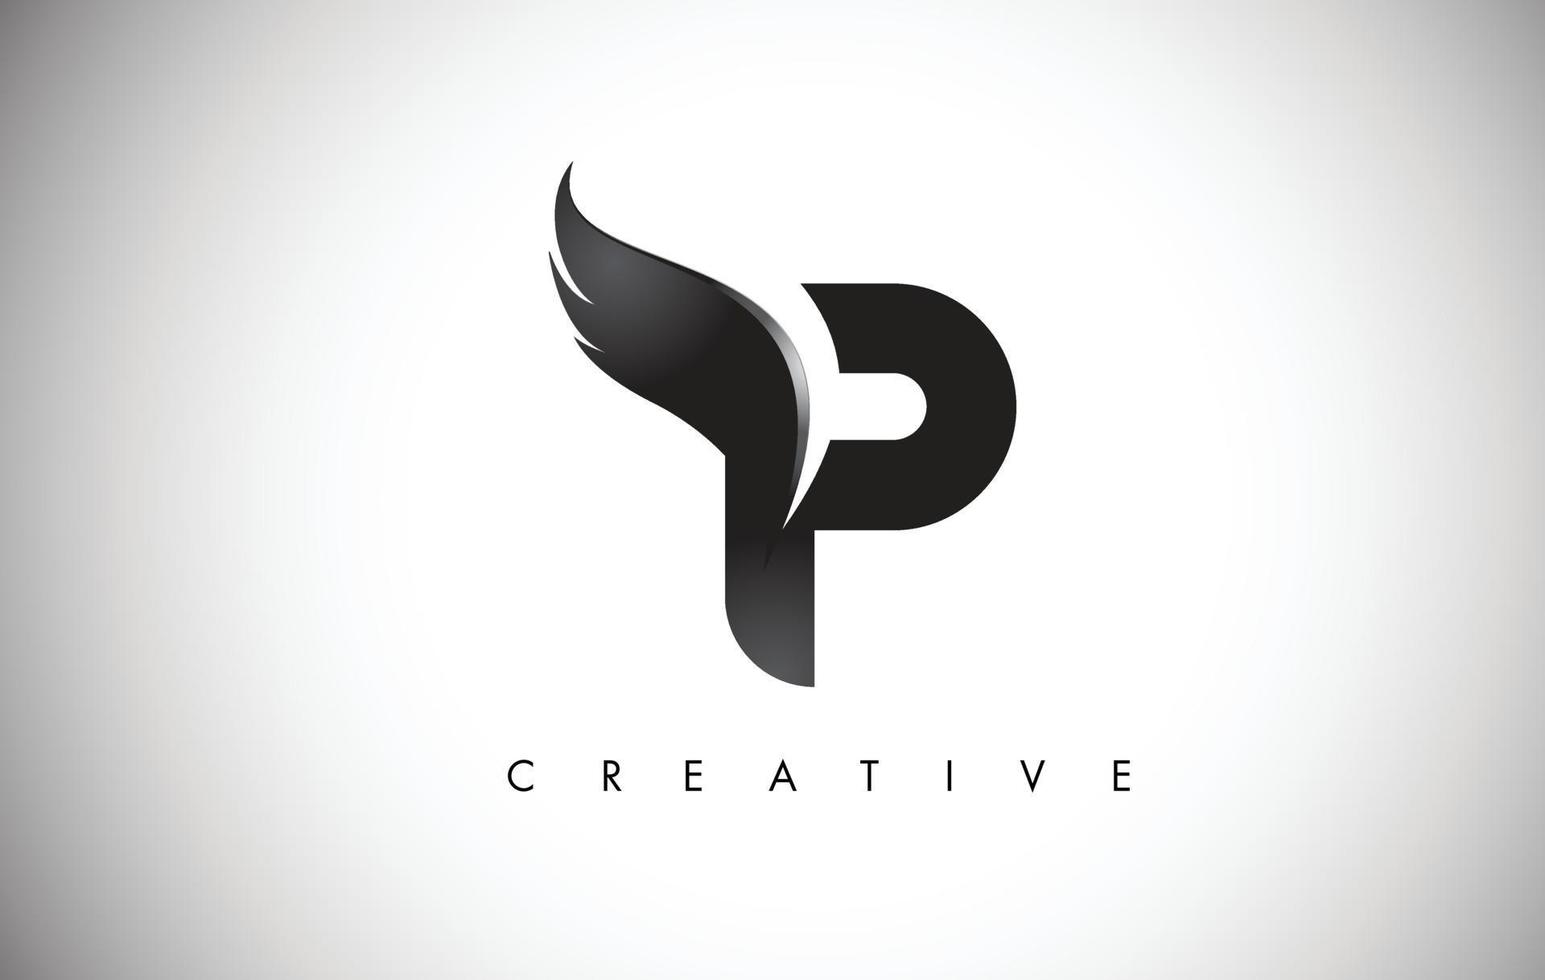 p brief vleugels logo ontwerp met zwarte vogel vlieg vleugel pictogram. vector